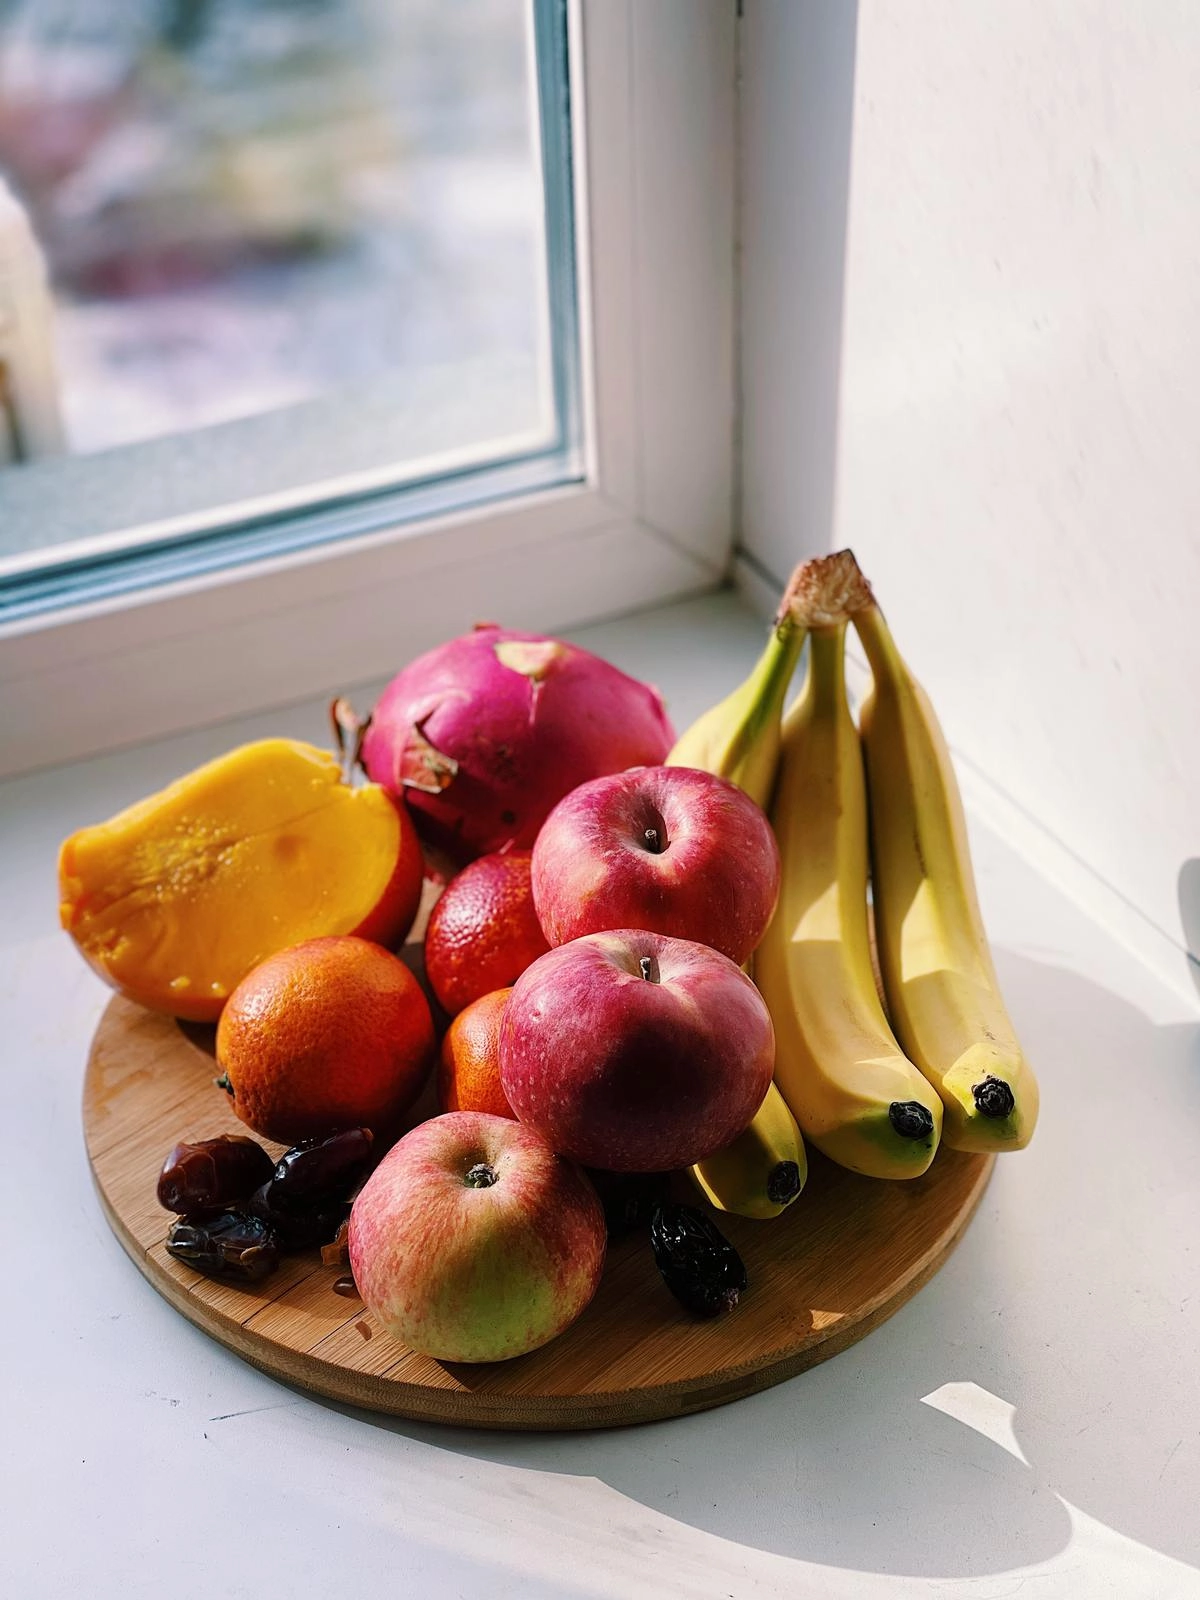 Бананы и яблоки содержат пребиотики